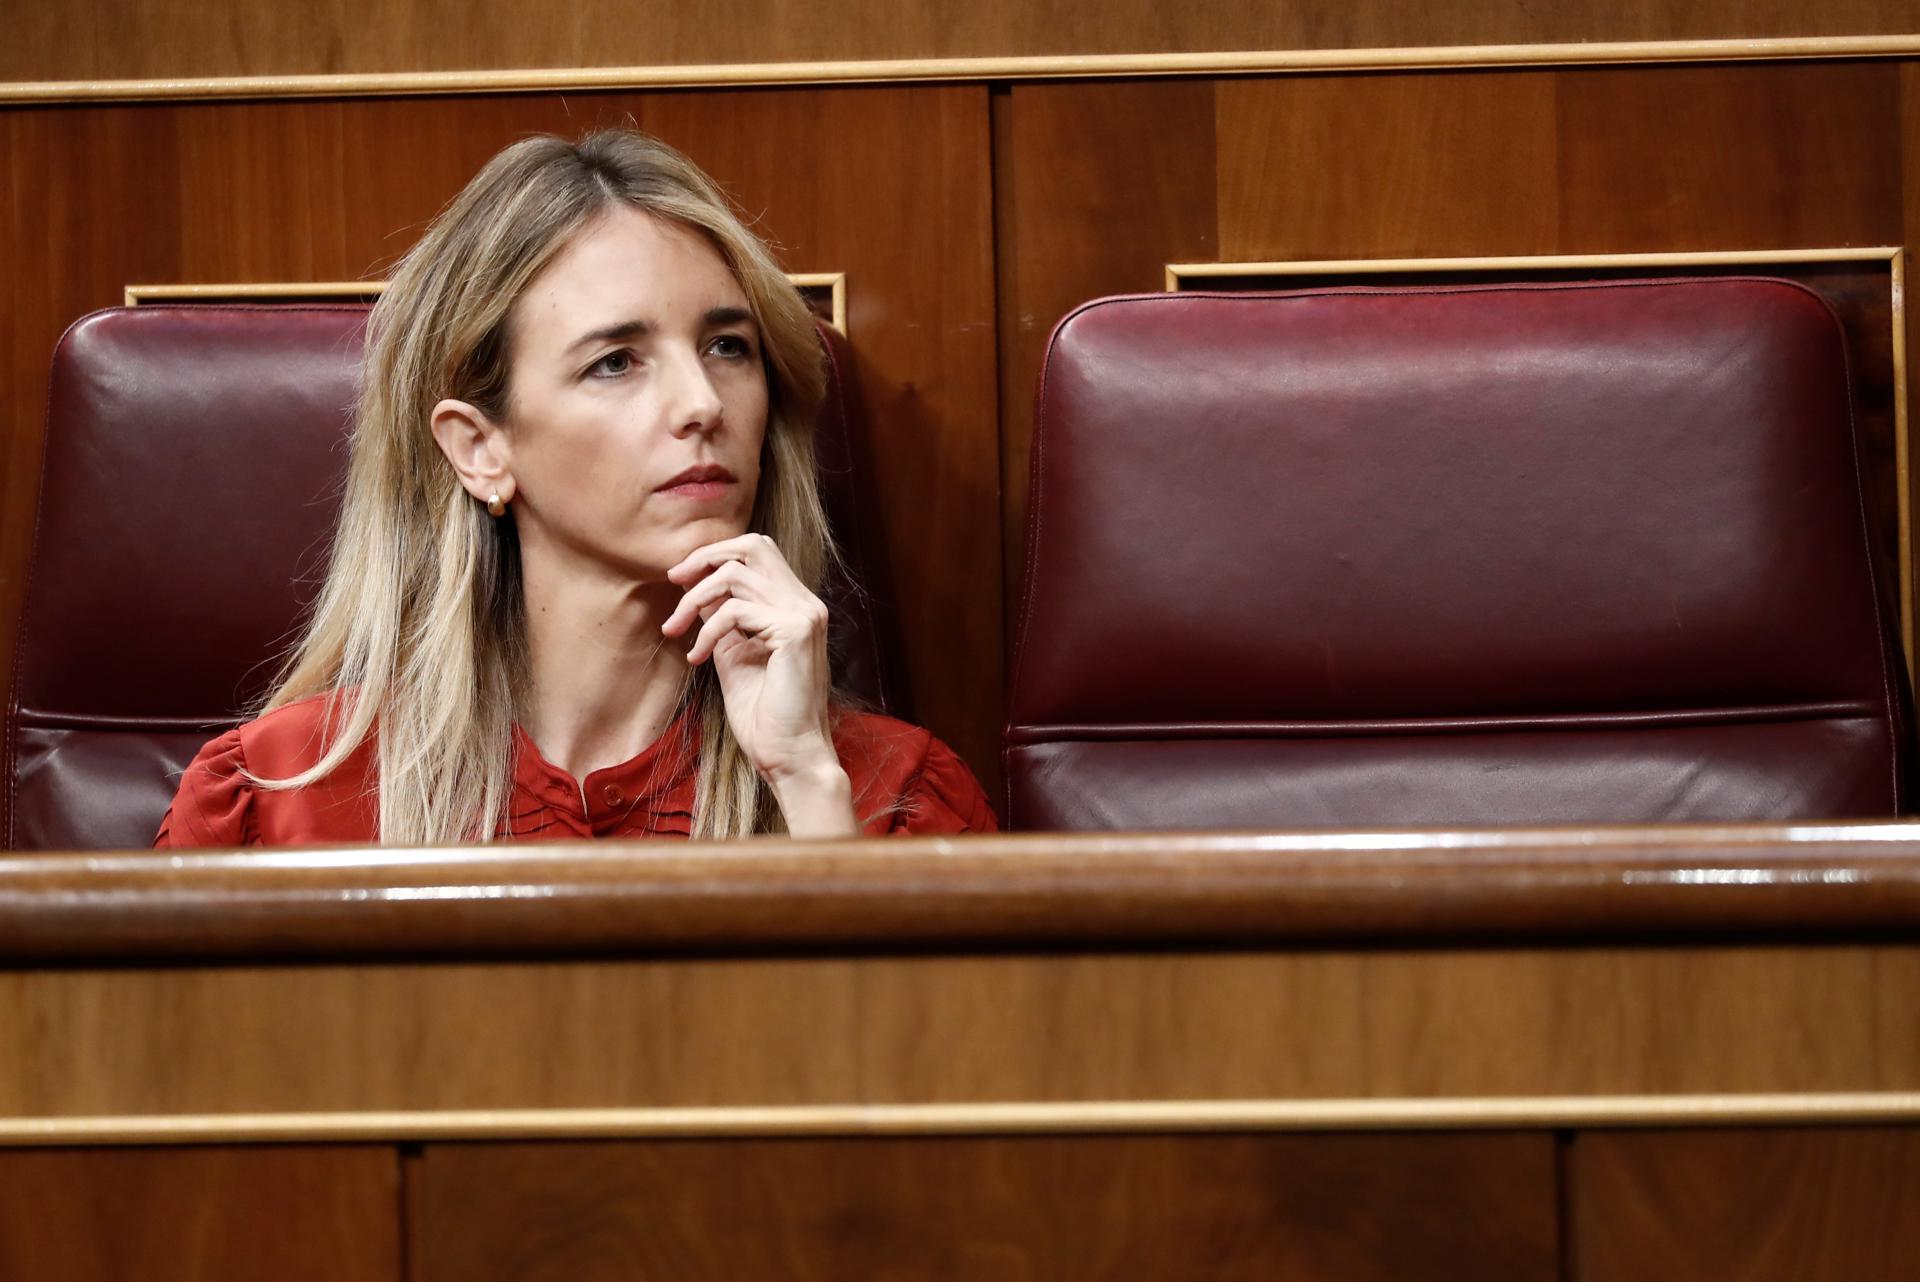 La diputada del PP Cayetana Álvarez de Toledo revela que le han extirpado un tumor de mama